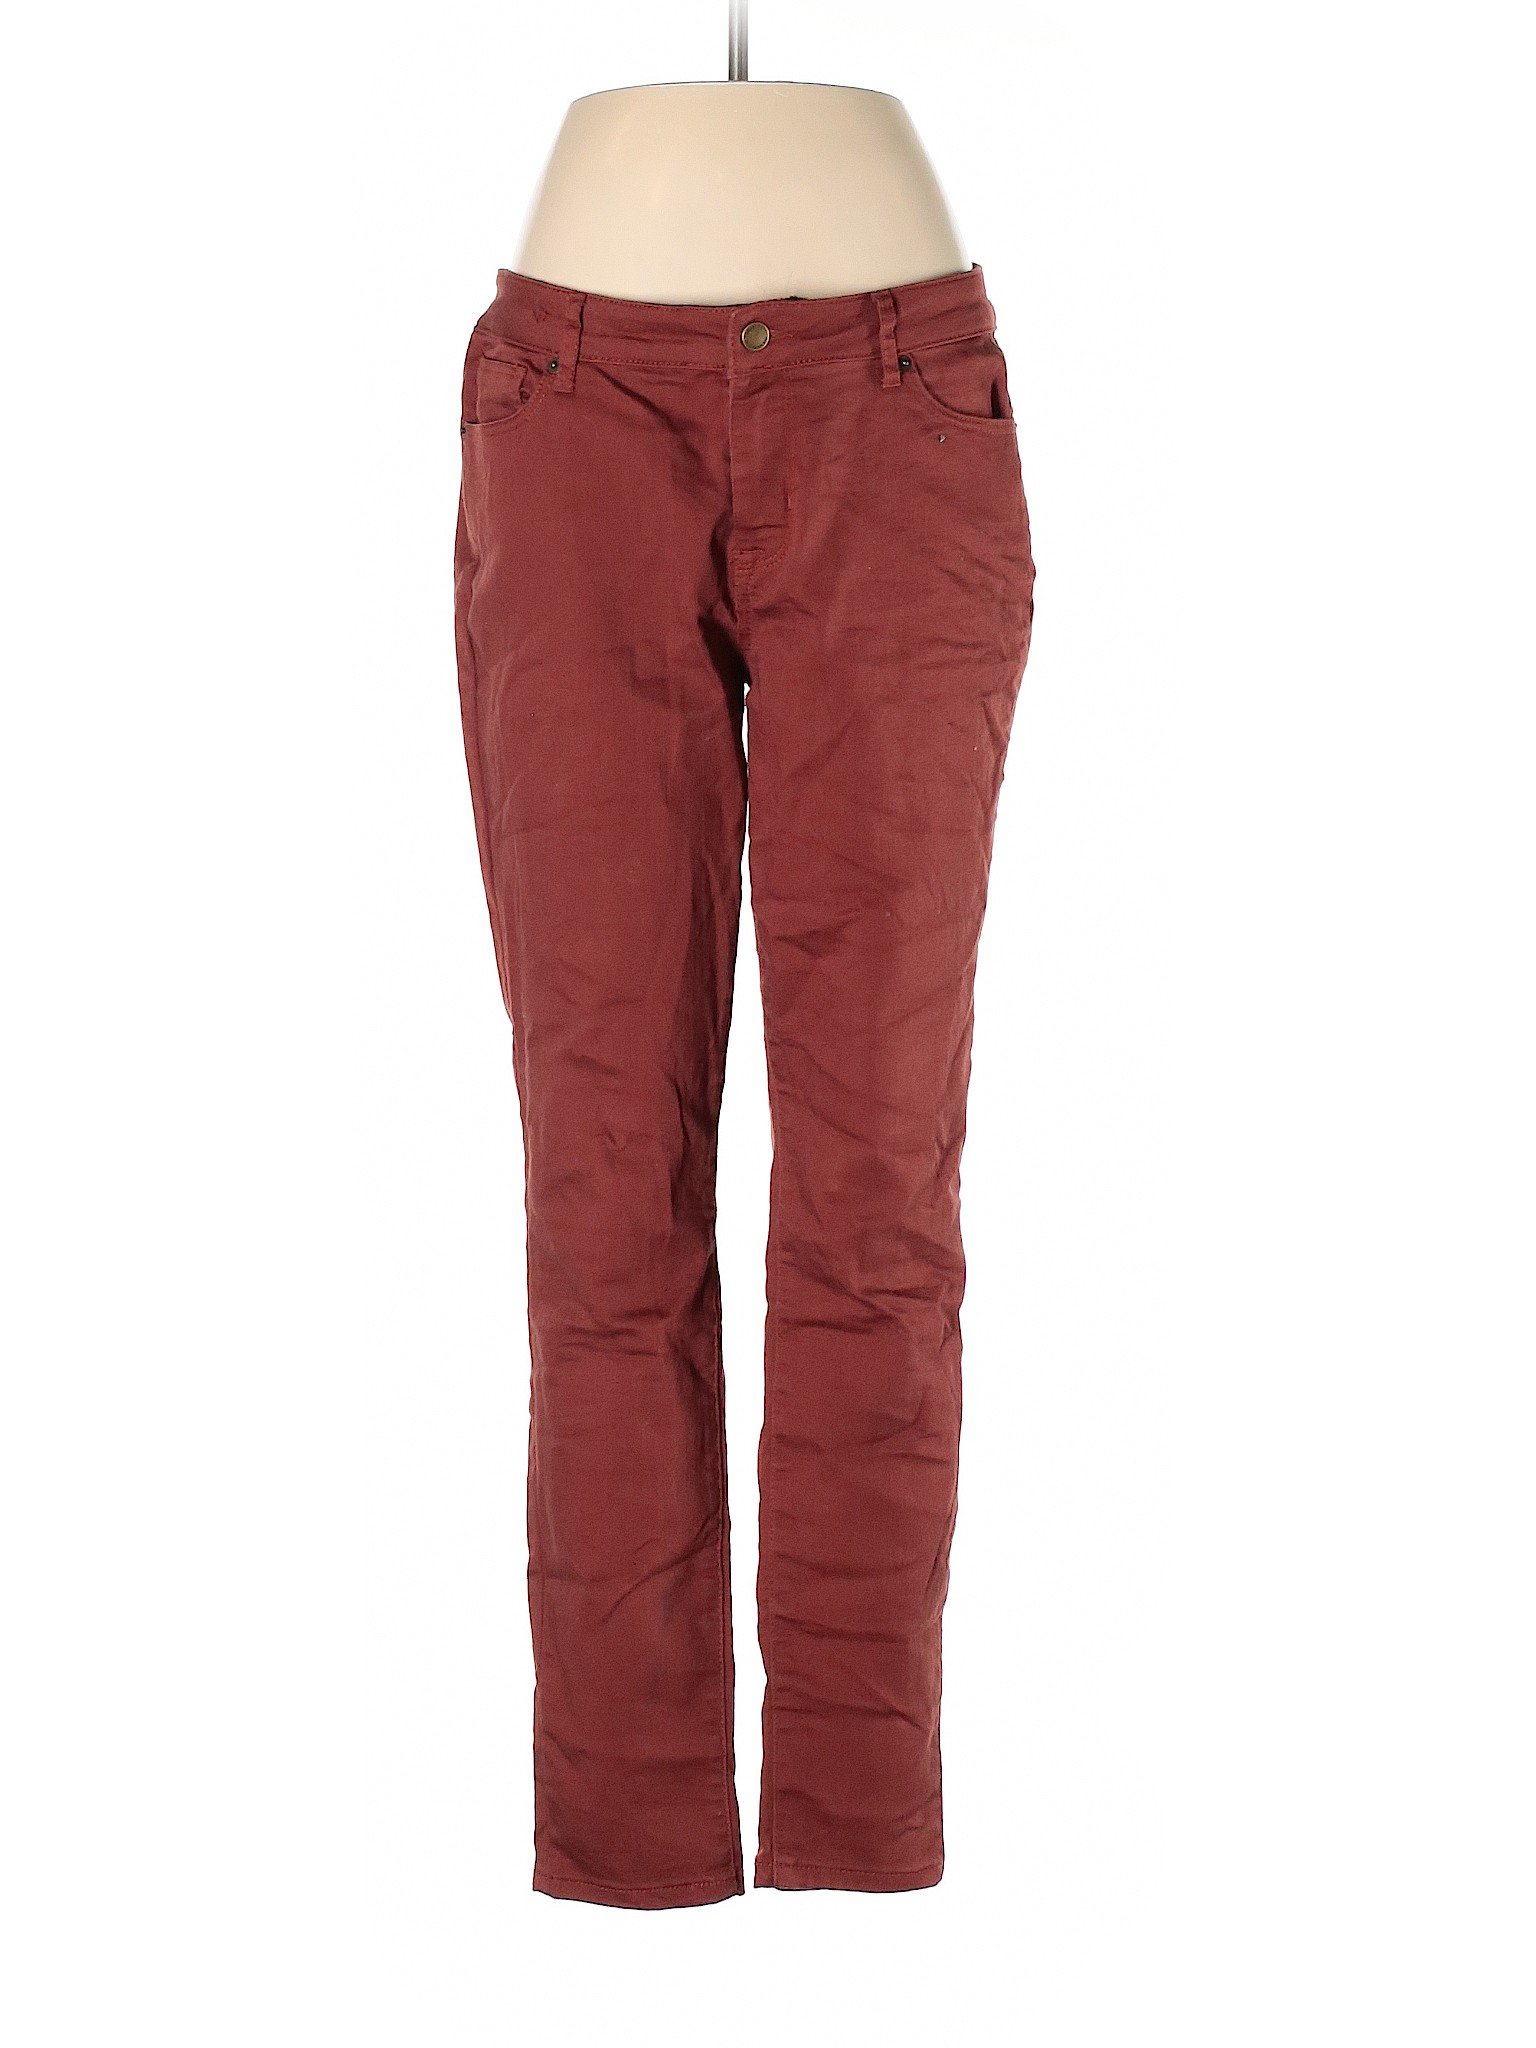 Westport Women Brown Jeans 8 | eBay